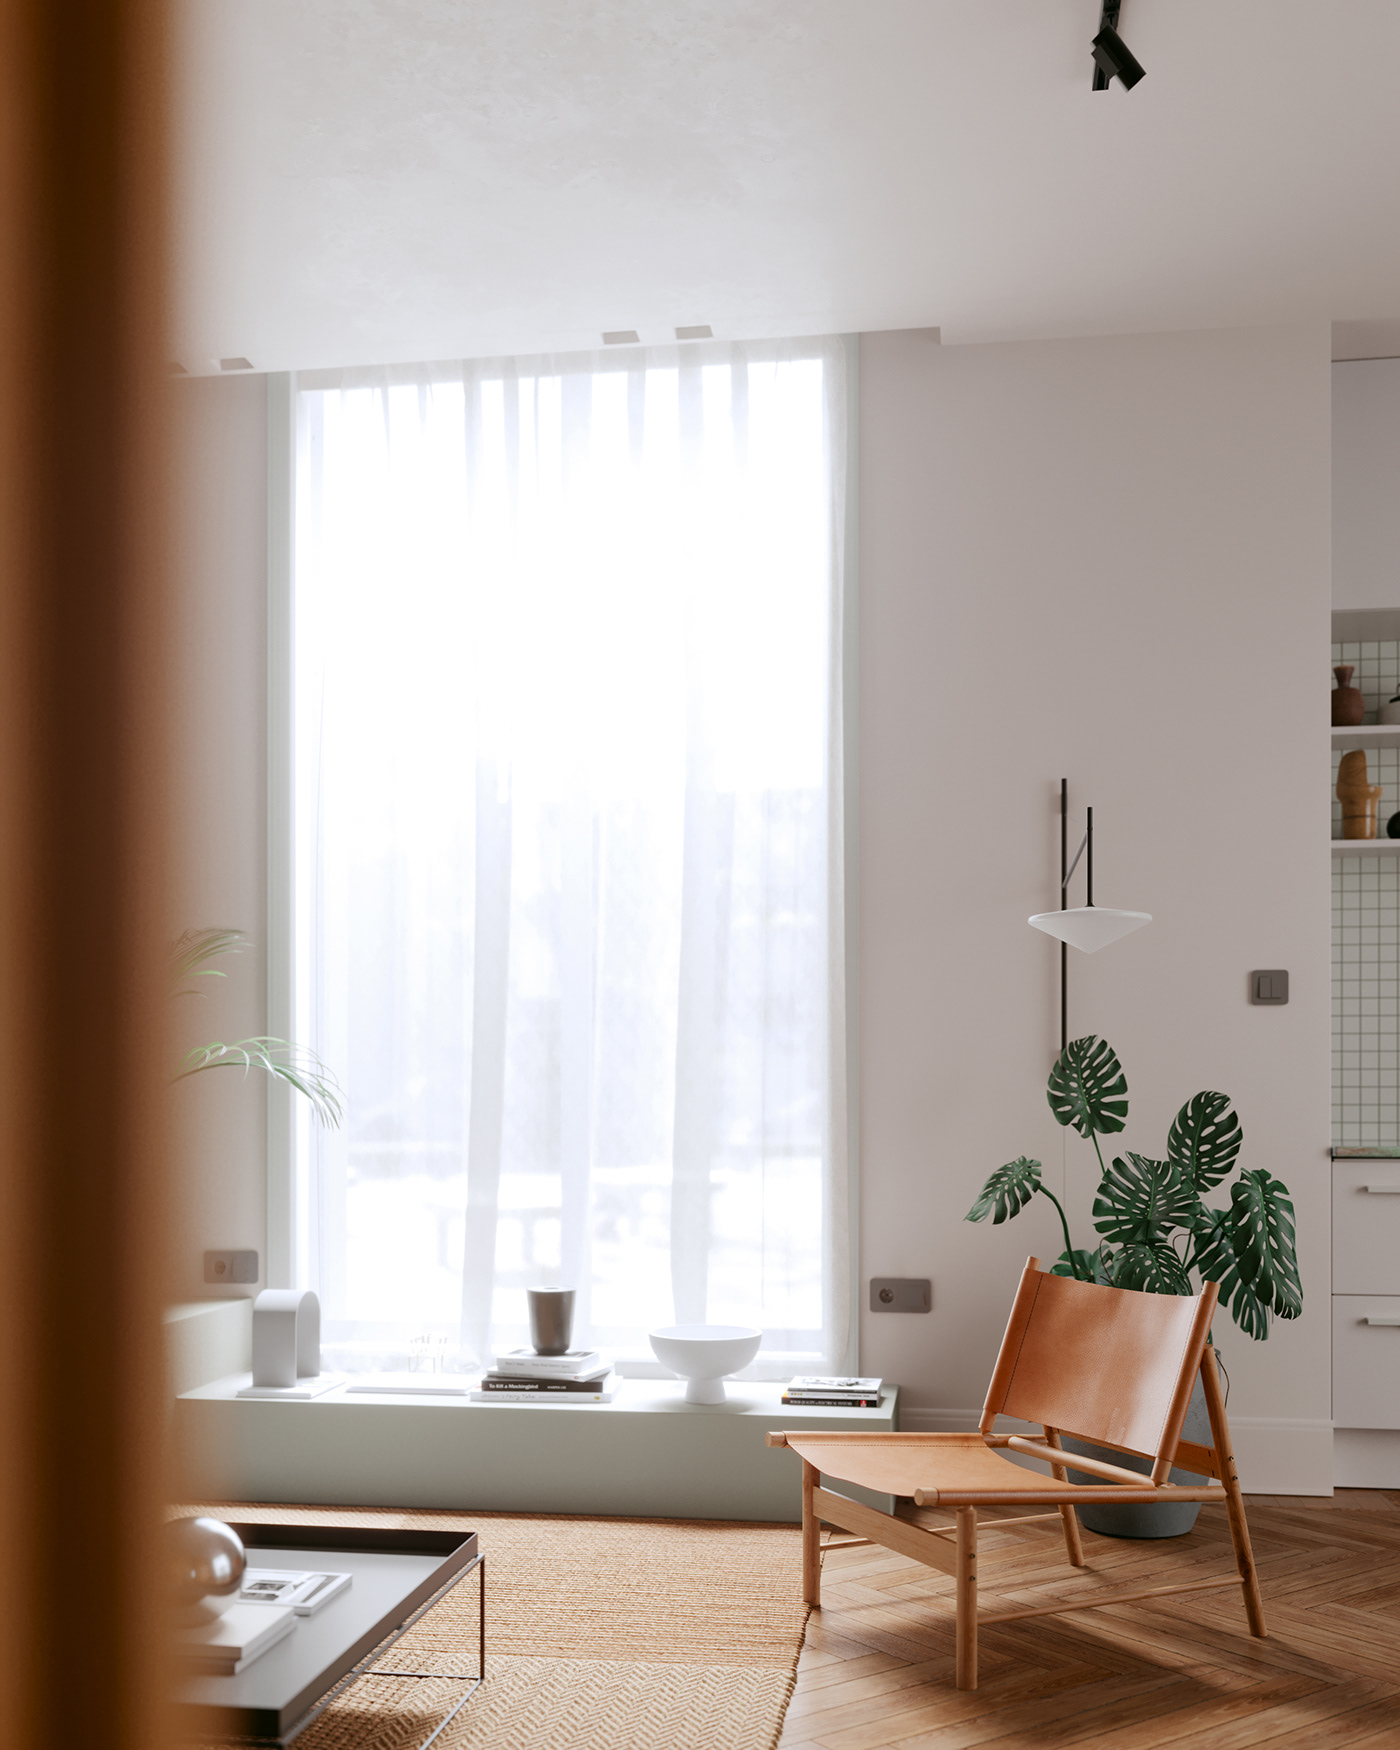 calm corona dining Interior kitchen minimal rendering Scandinavian siting visualisation